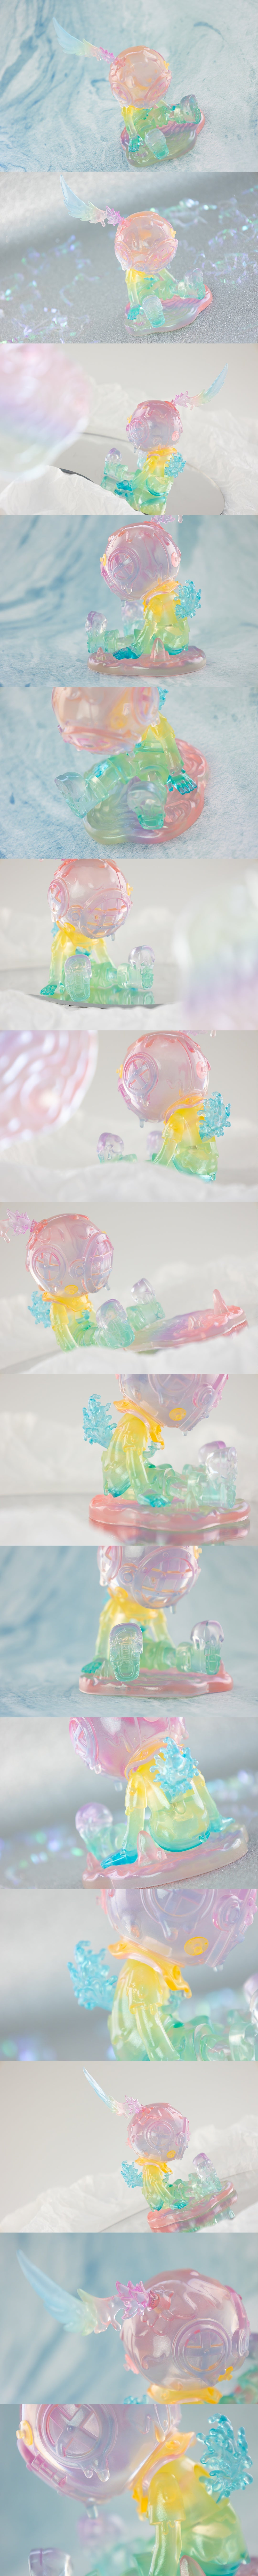 SANK TOYS Sank Good Night Series Water Mirror Collectible Figurine